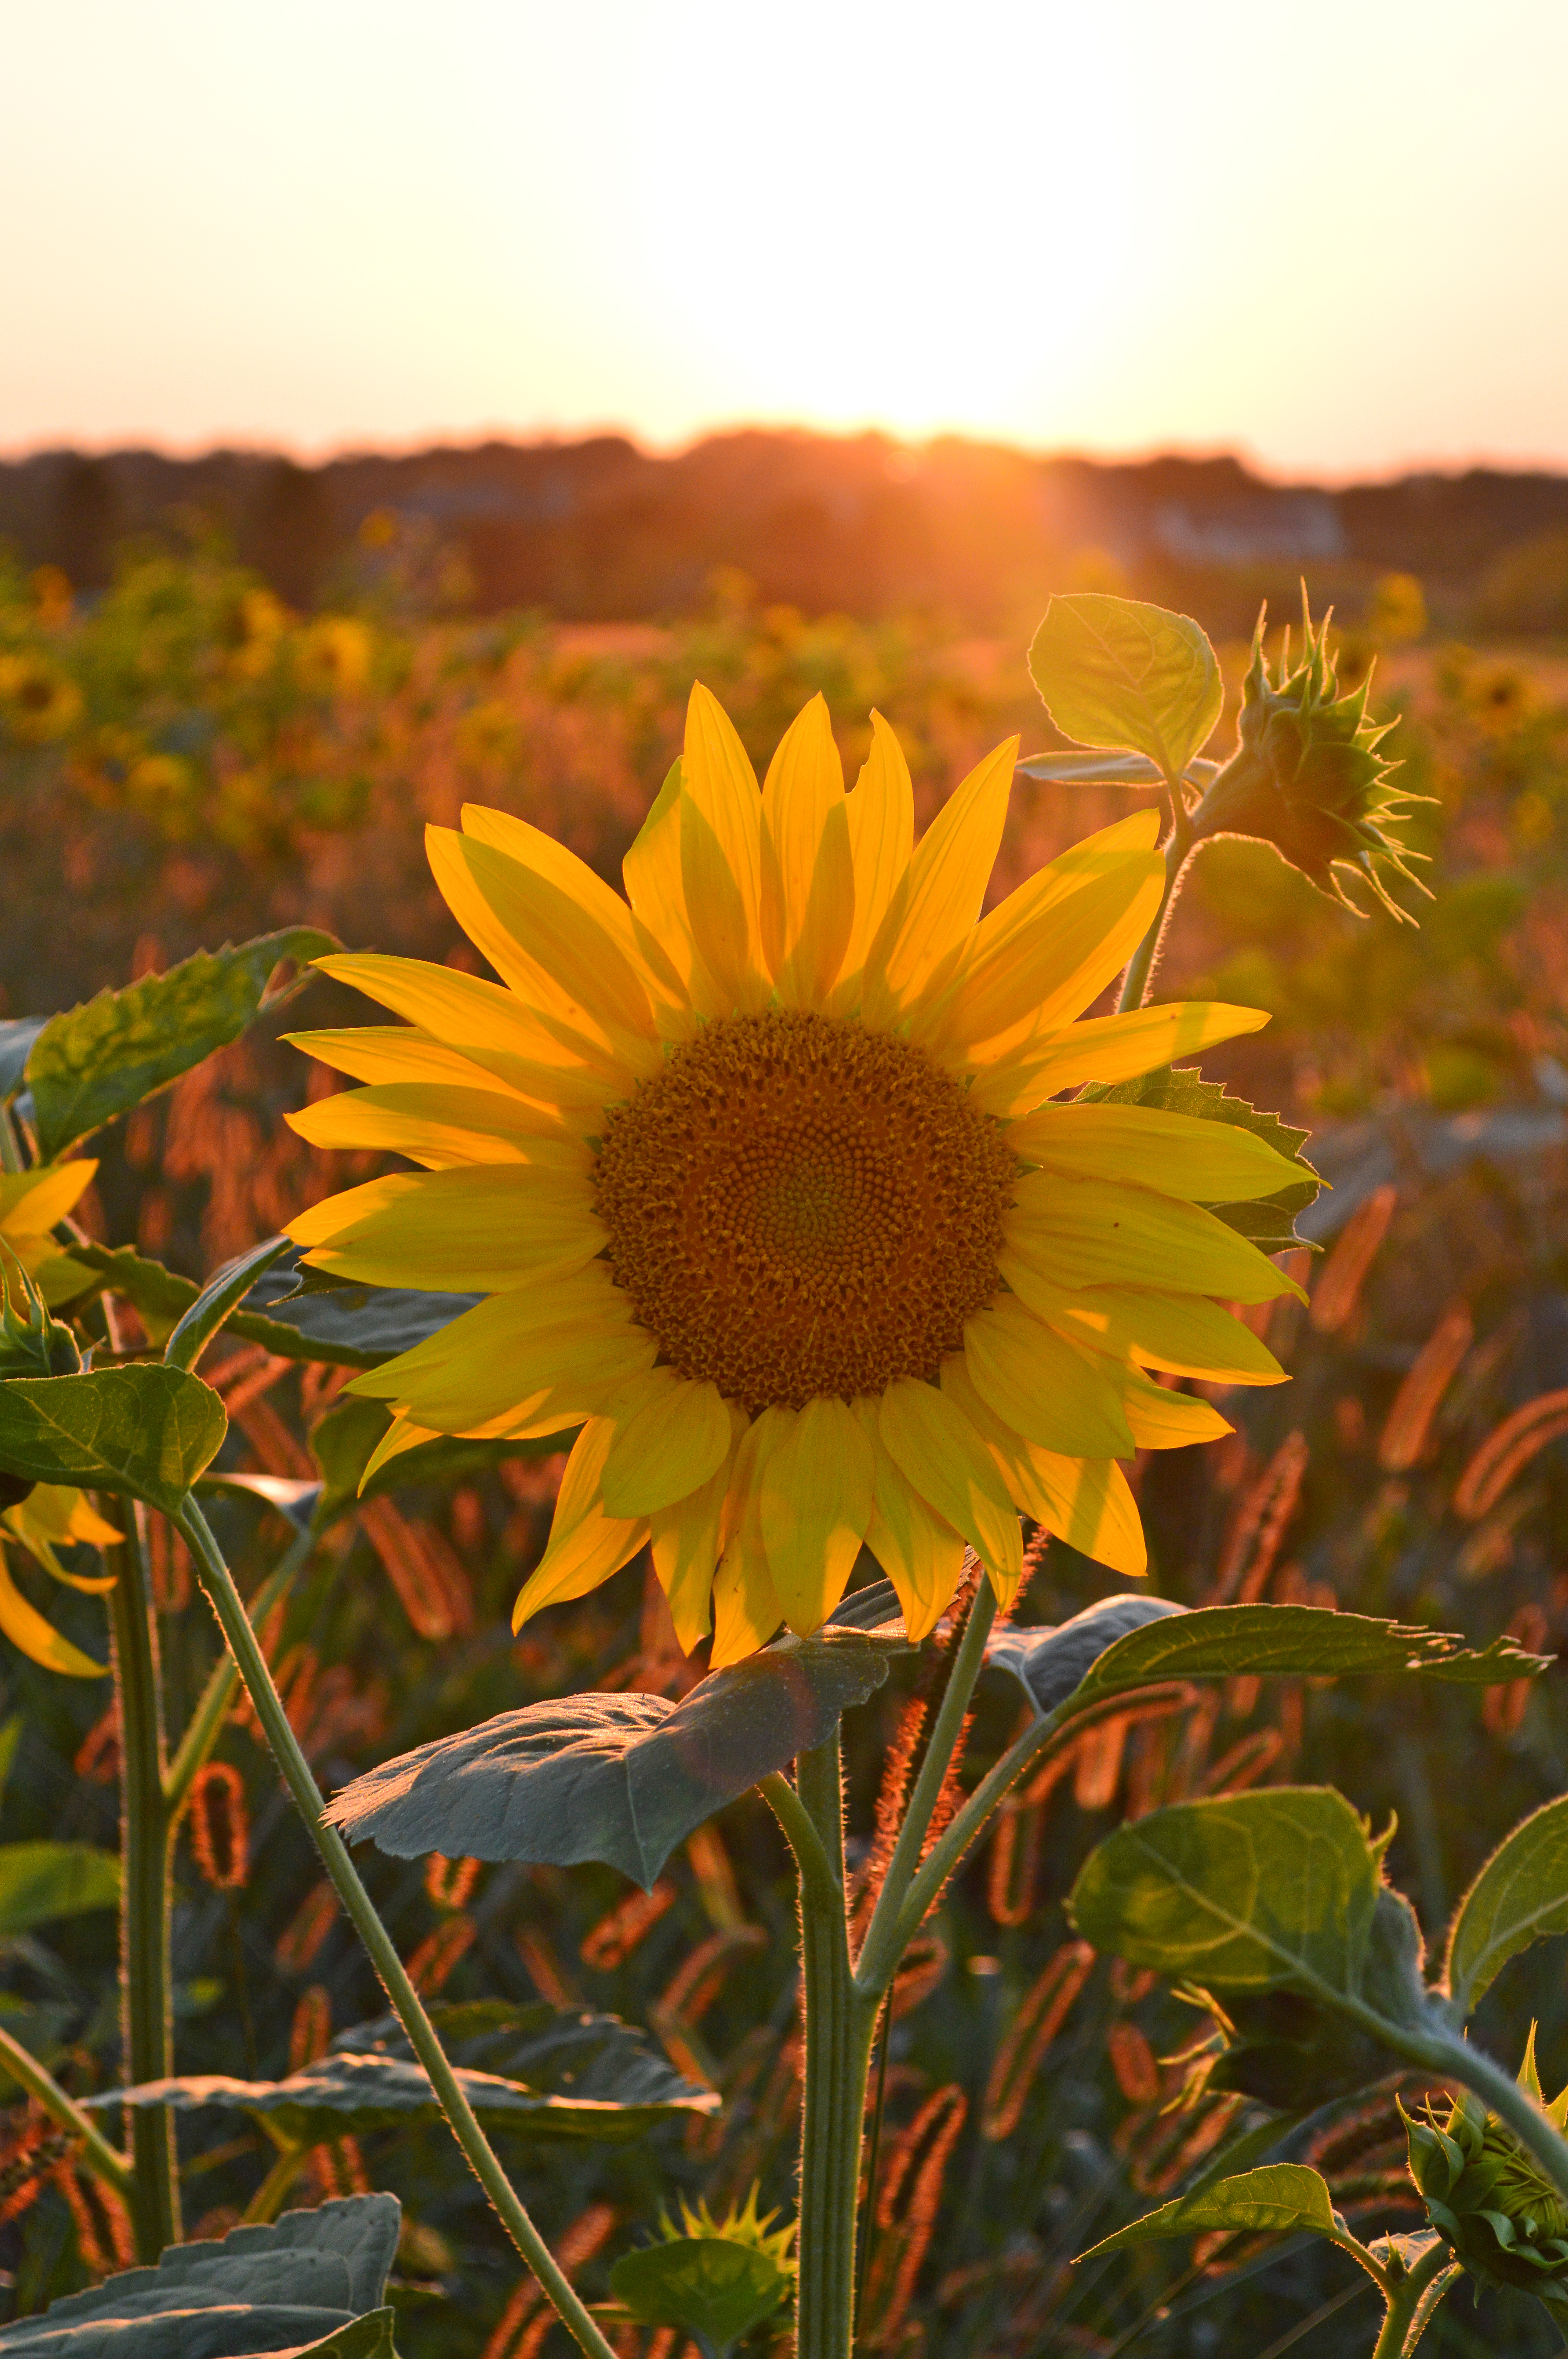 Sunflowers at Sunset | Corianne Egan